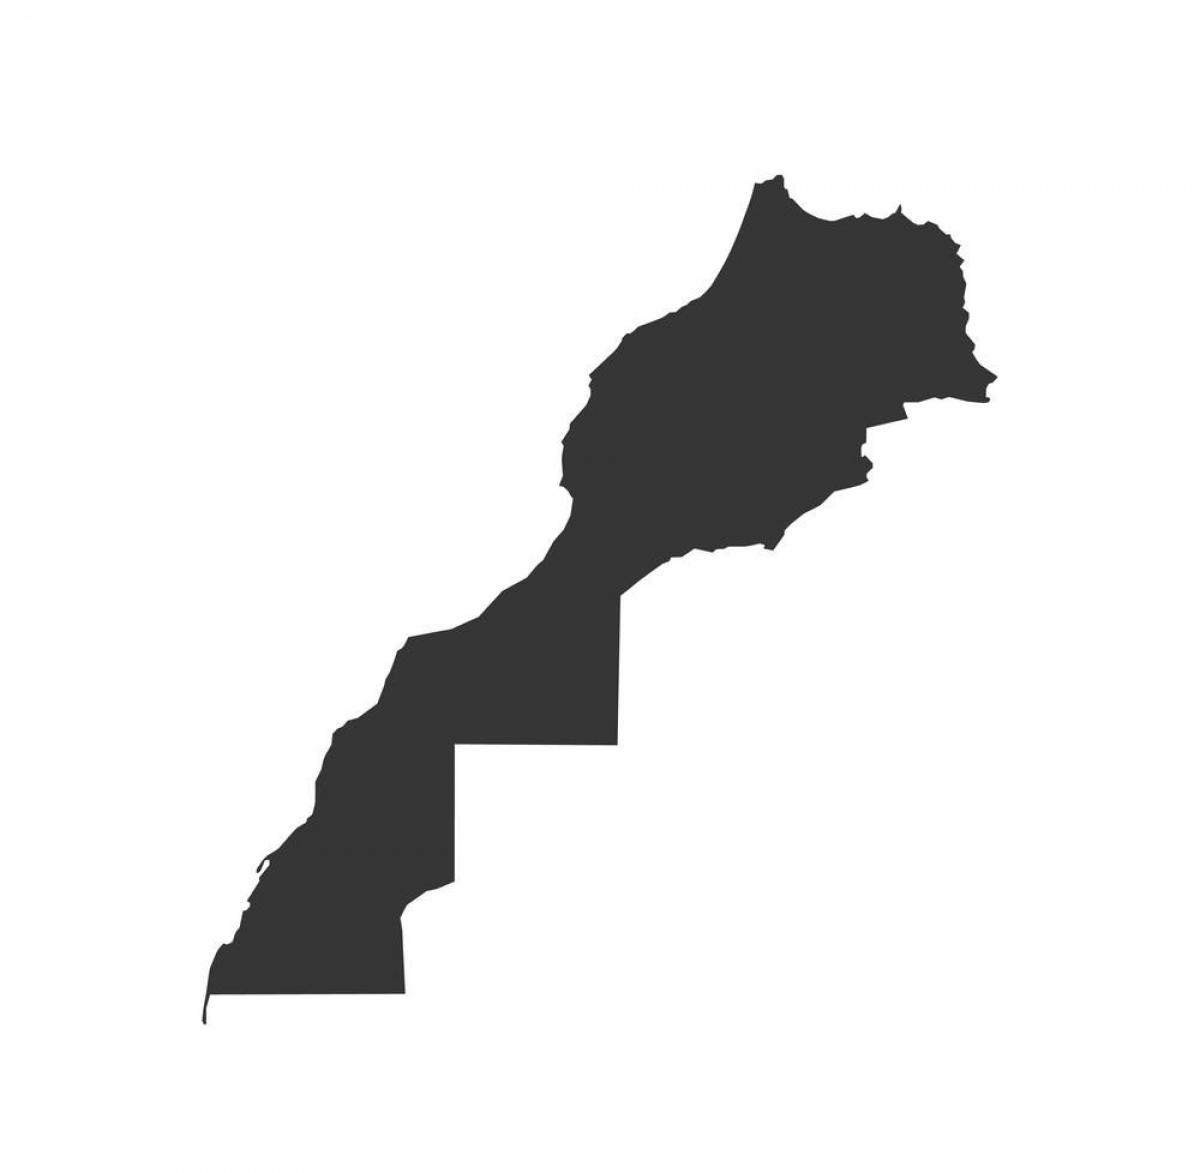 Mapa vectorial de Marruecos